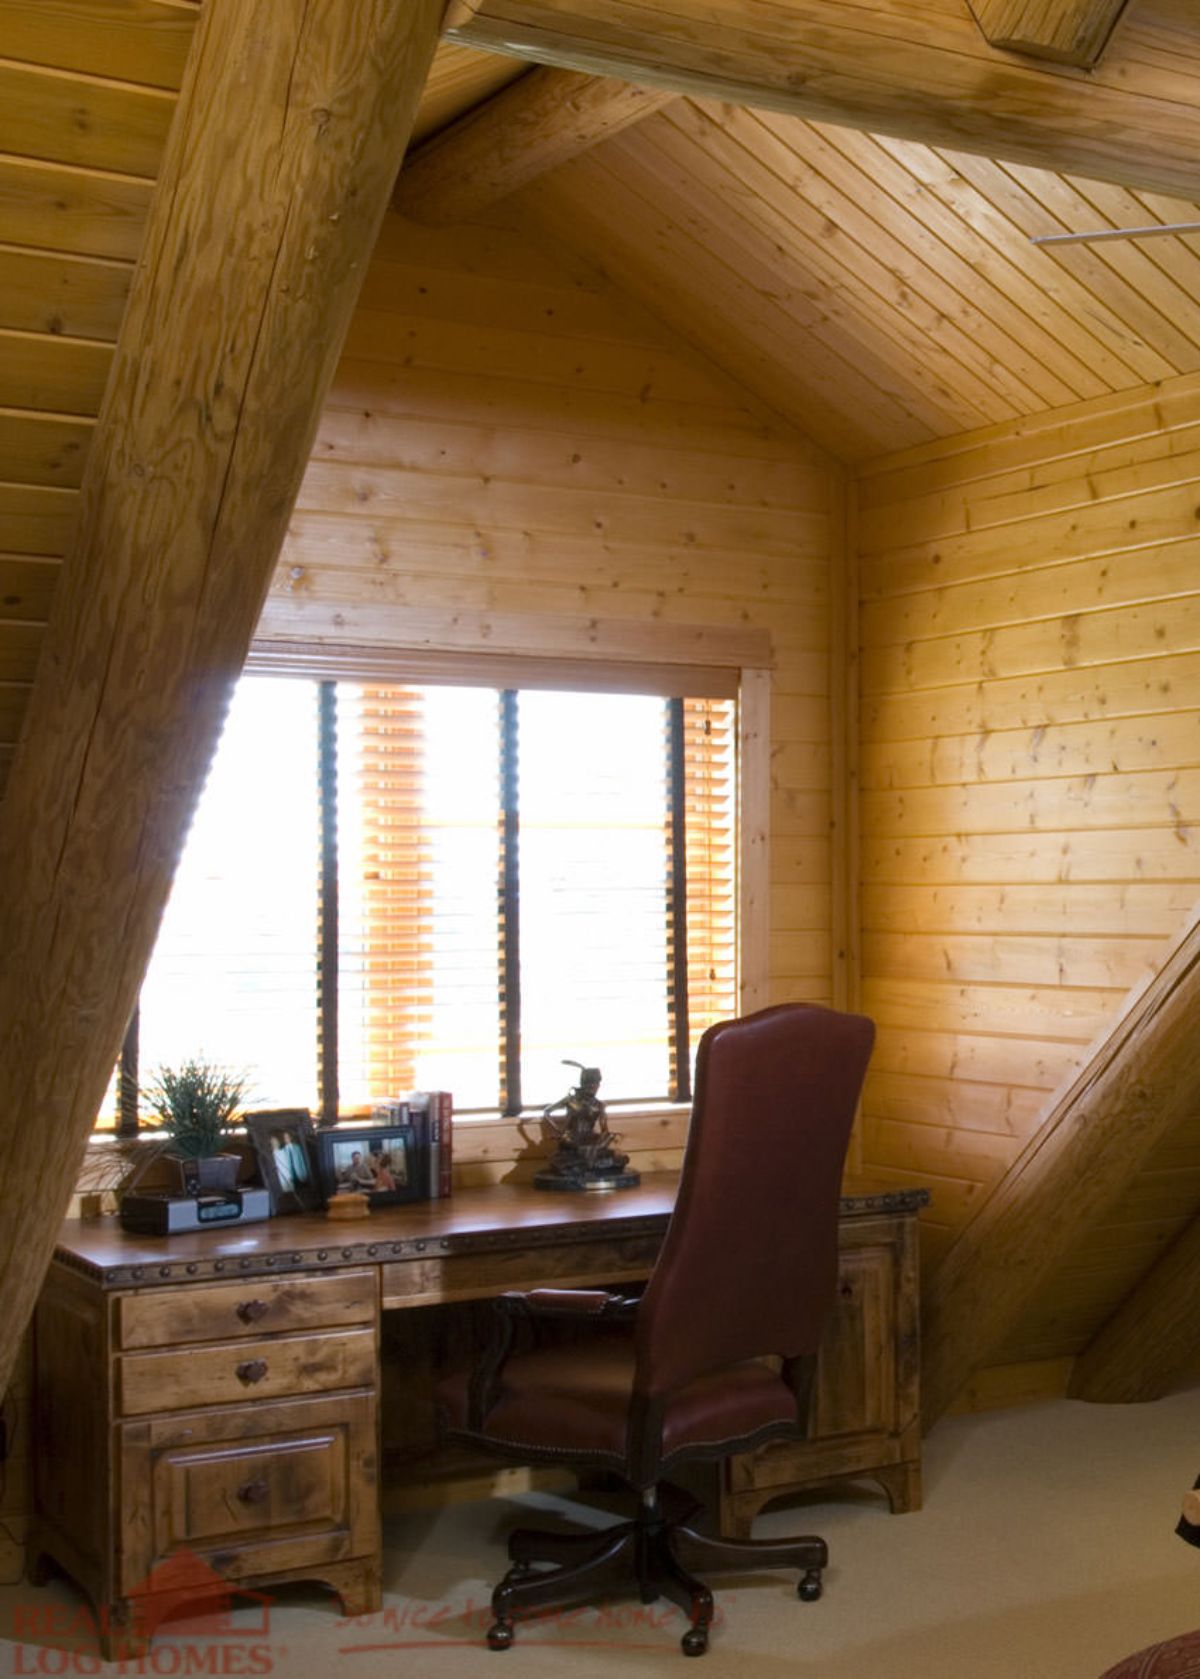 desk with maroon office chair under dormer window in log cabin